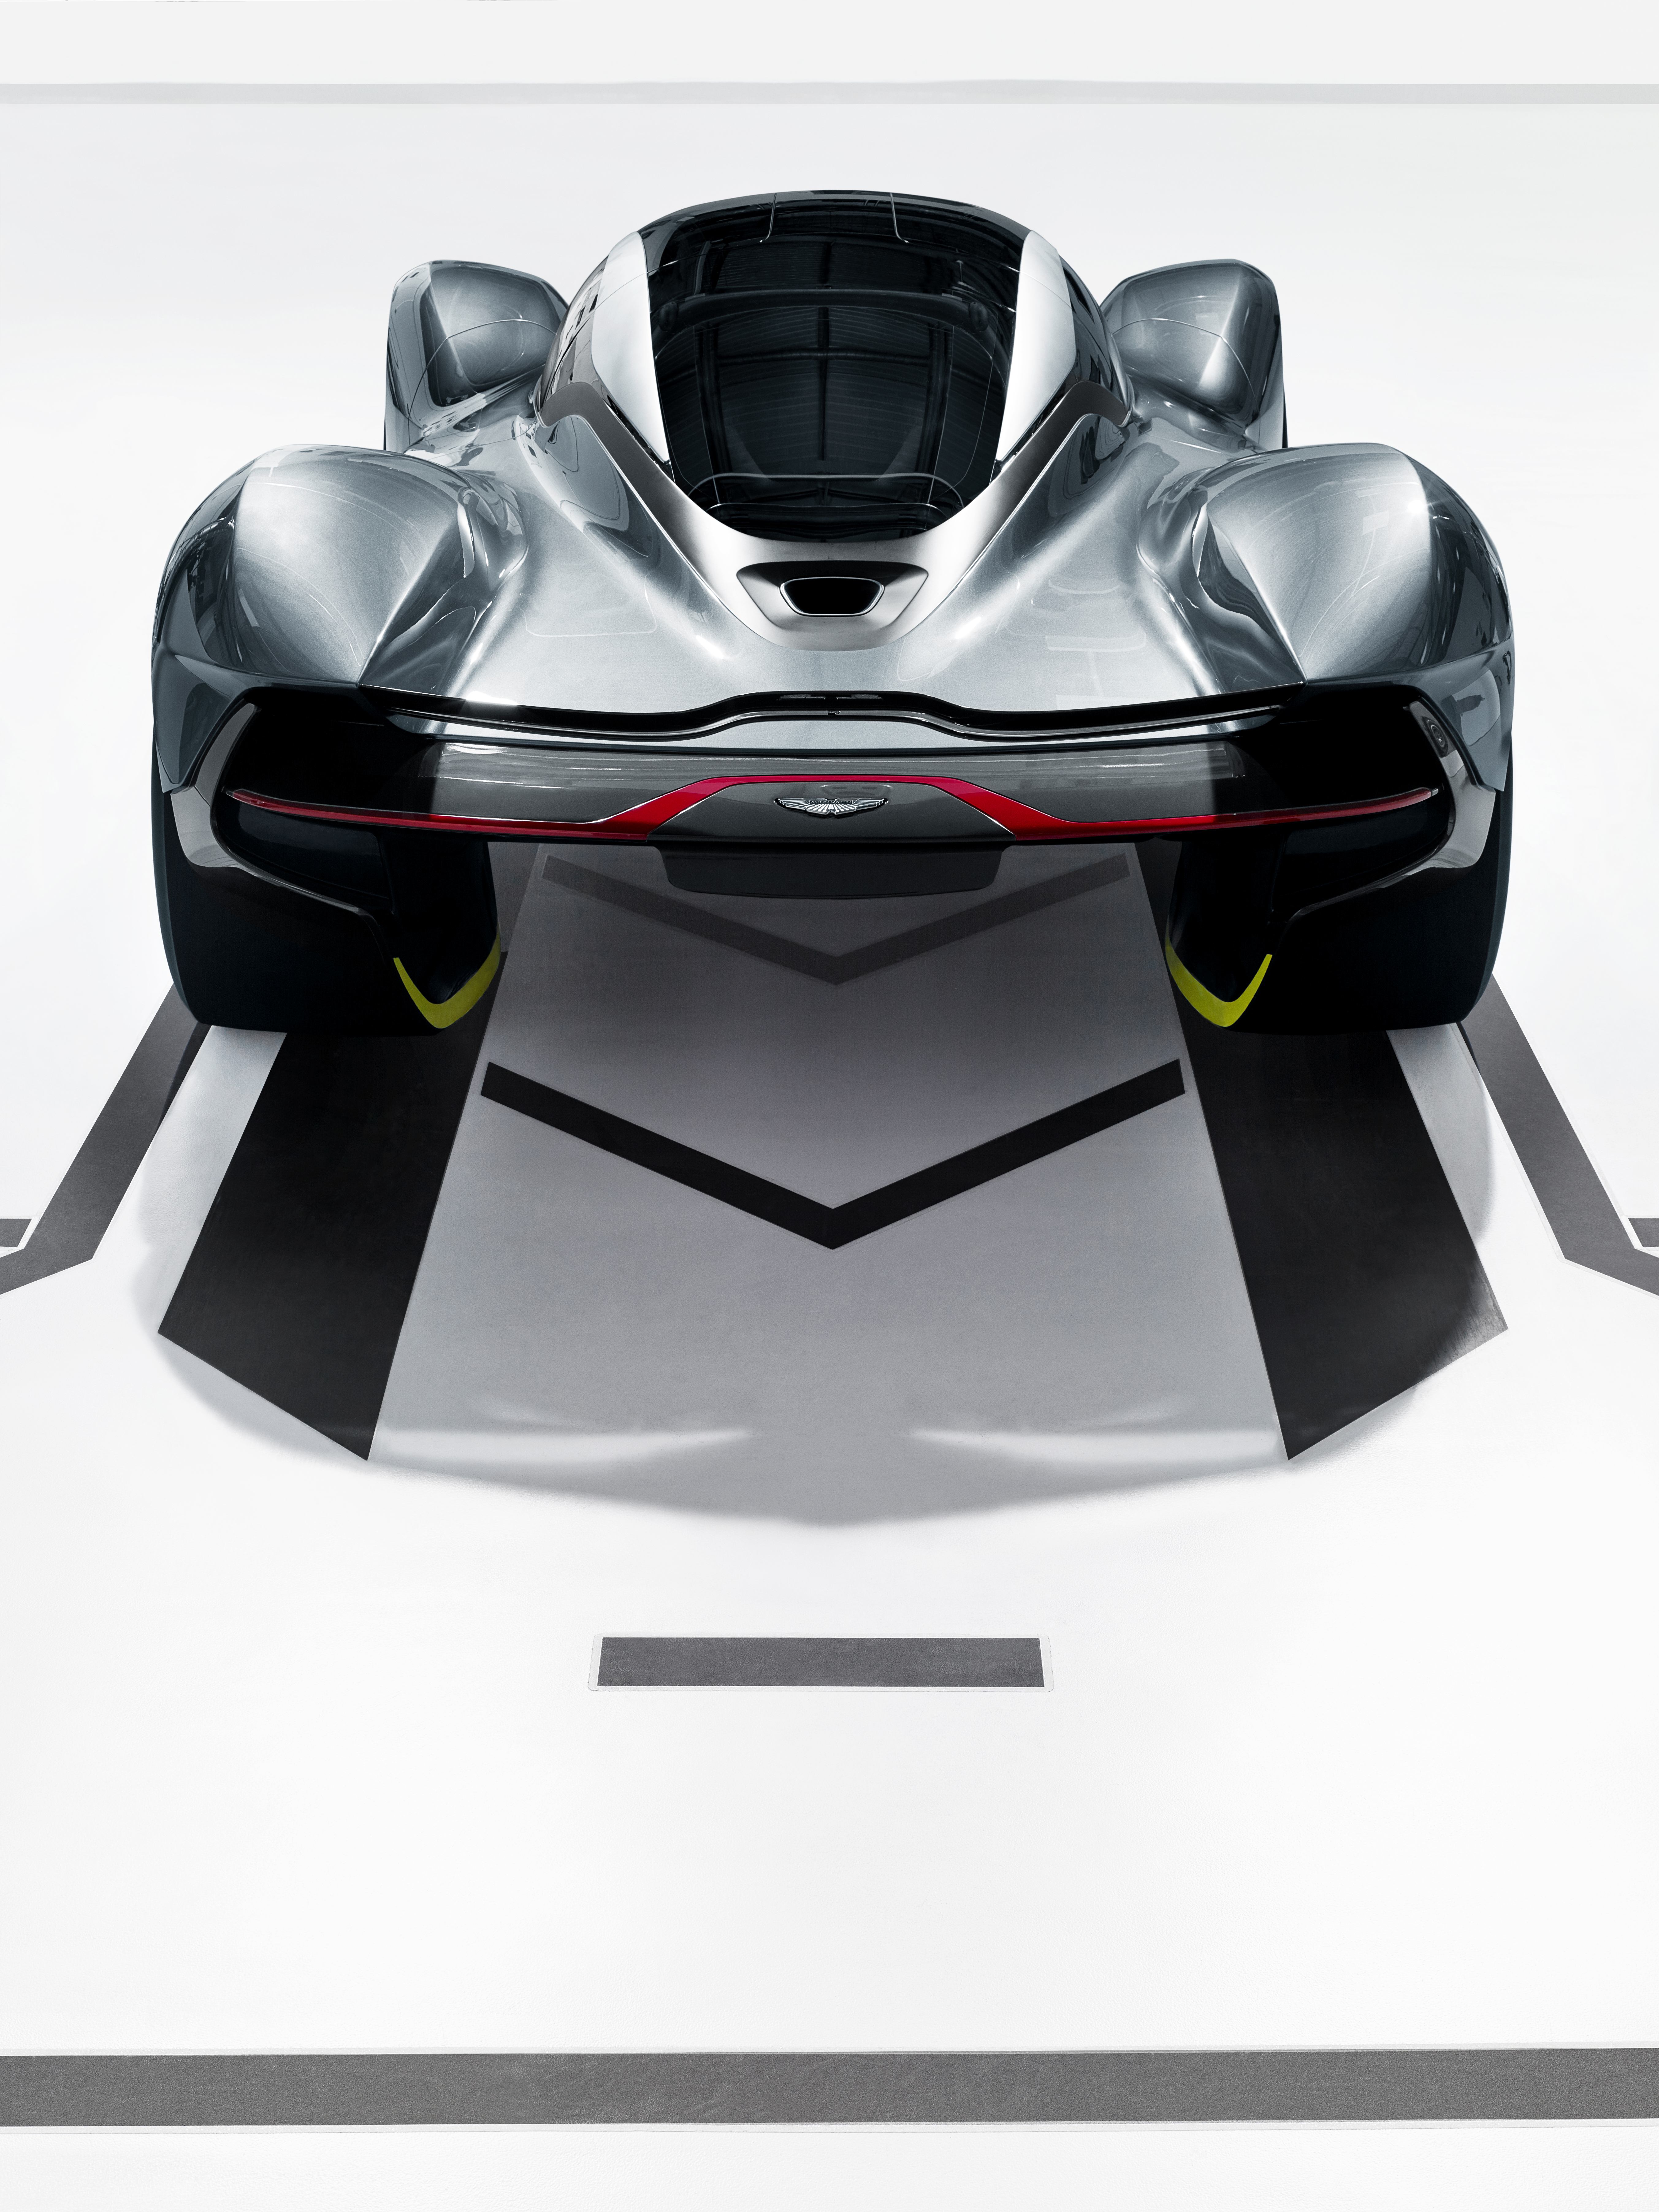 Revolutionary Luxury: The Aston Martin AM RB 001 Concept